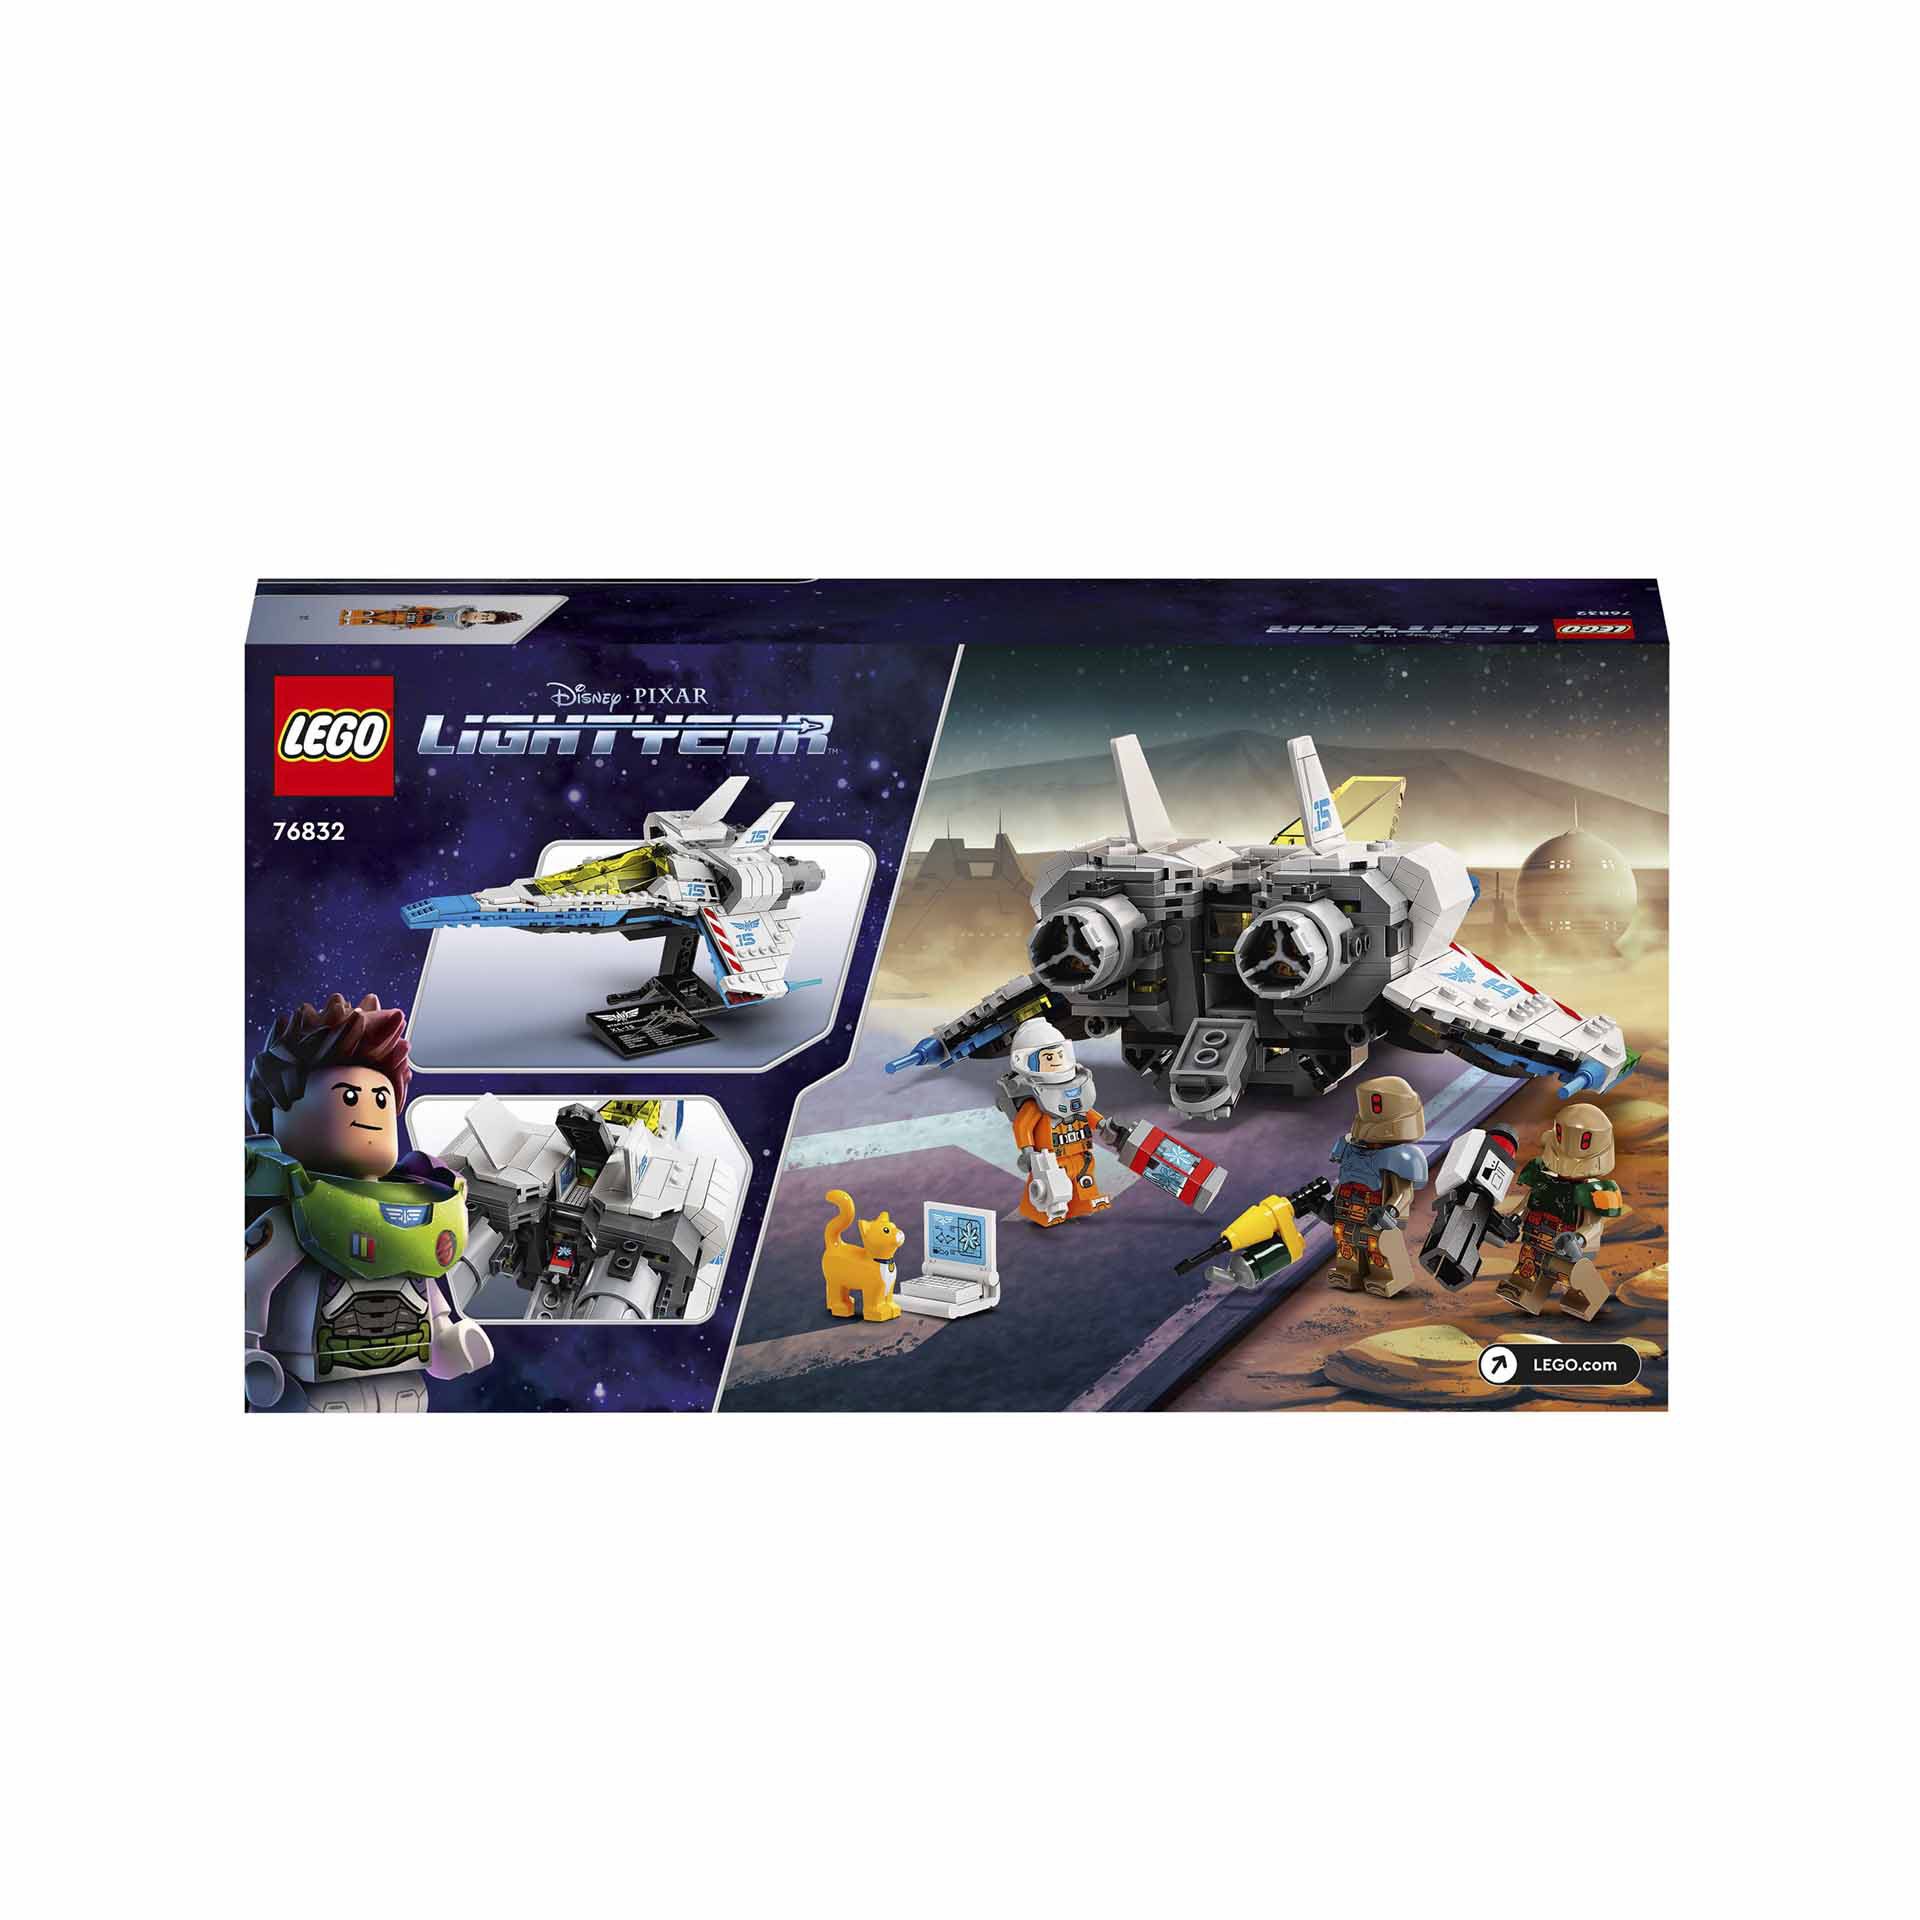 LEGO Lightyear Disney e Pixar Astronave XL-15, Giochi per Bambini dai 8 Anni, Na 76832, , large